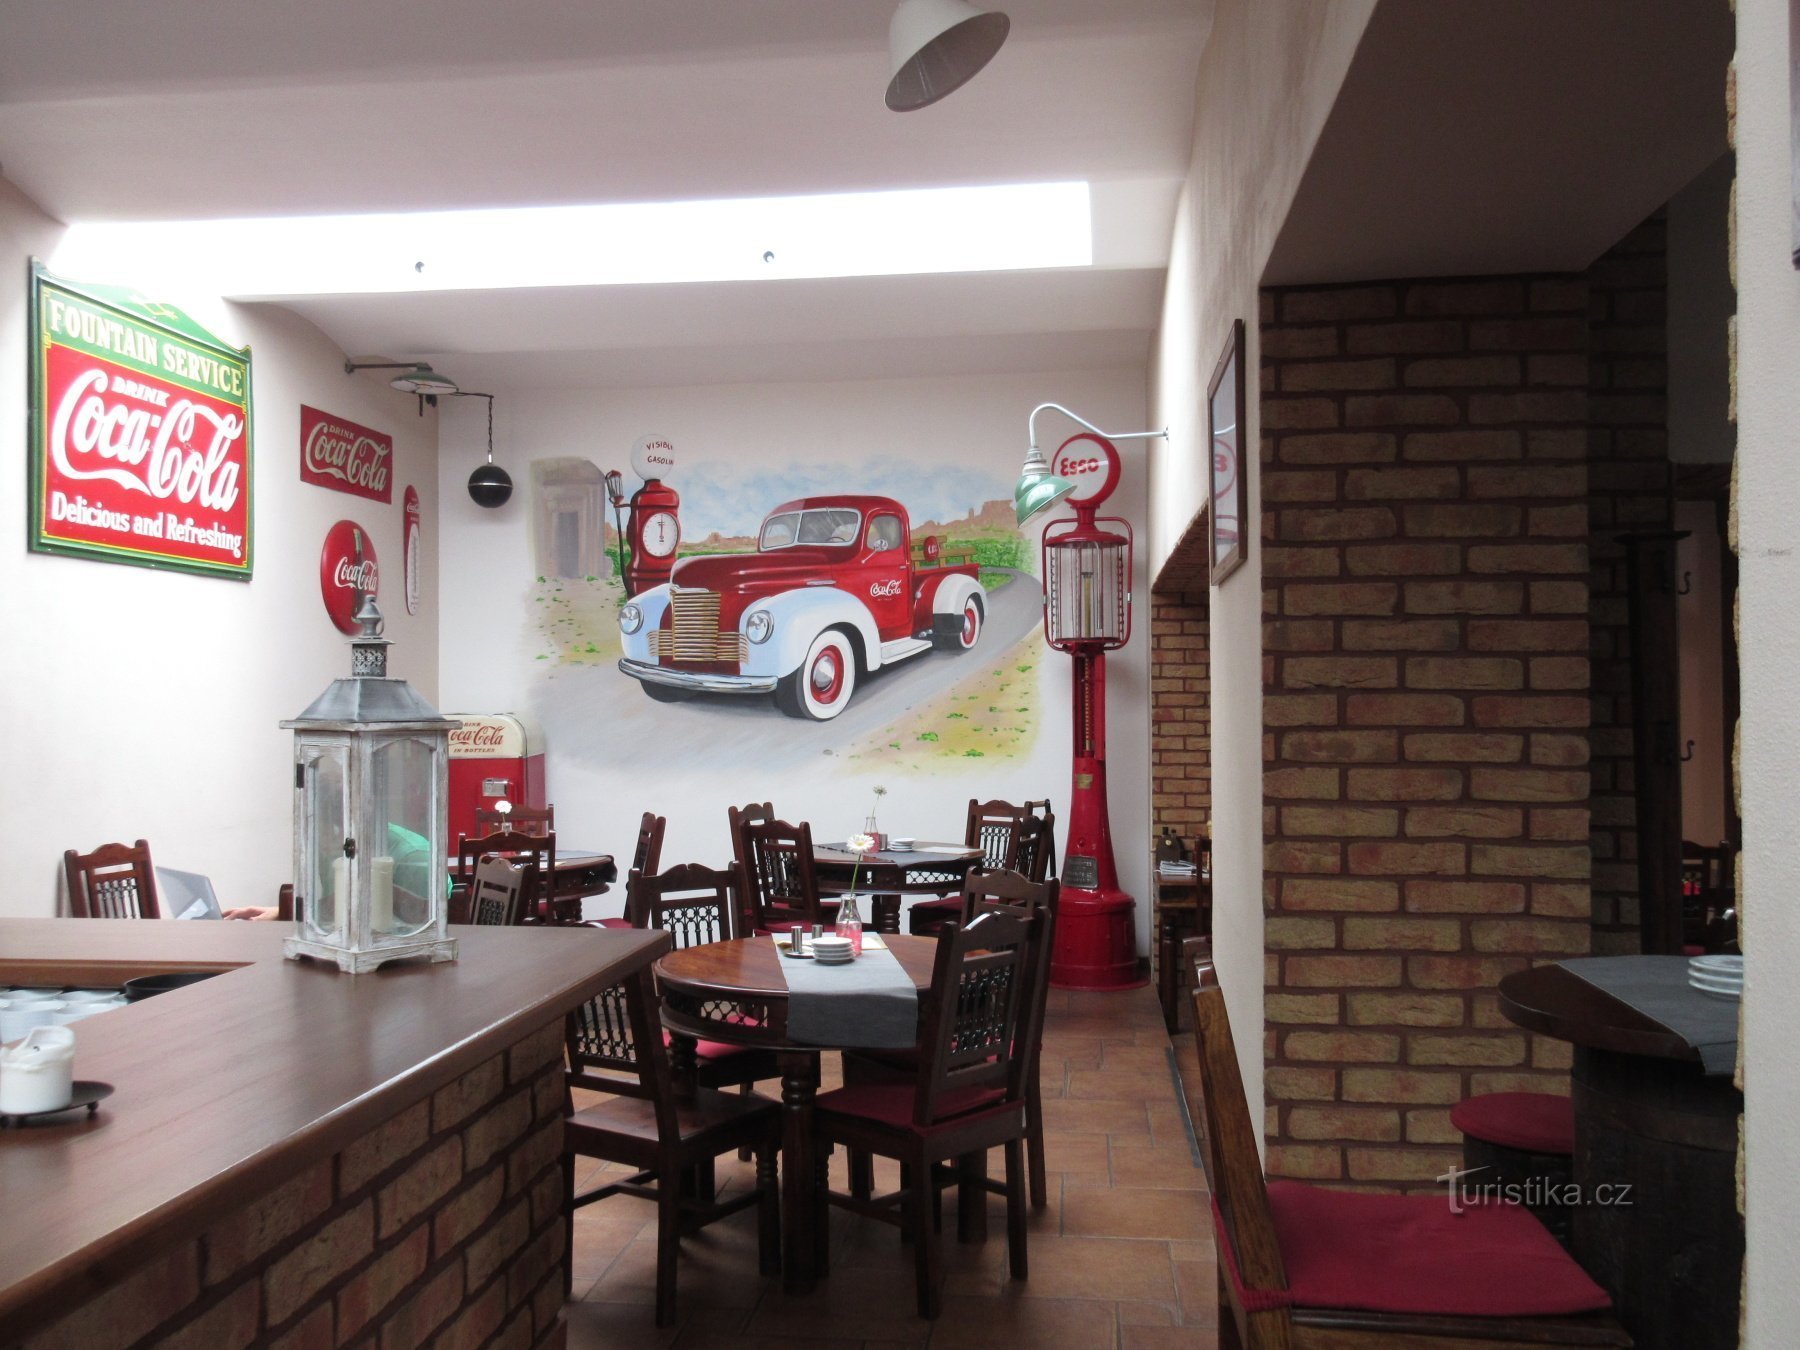 Otrokovice - μουσείο και μικροζυθοποιία Harley Pub